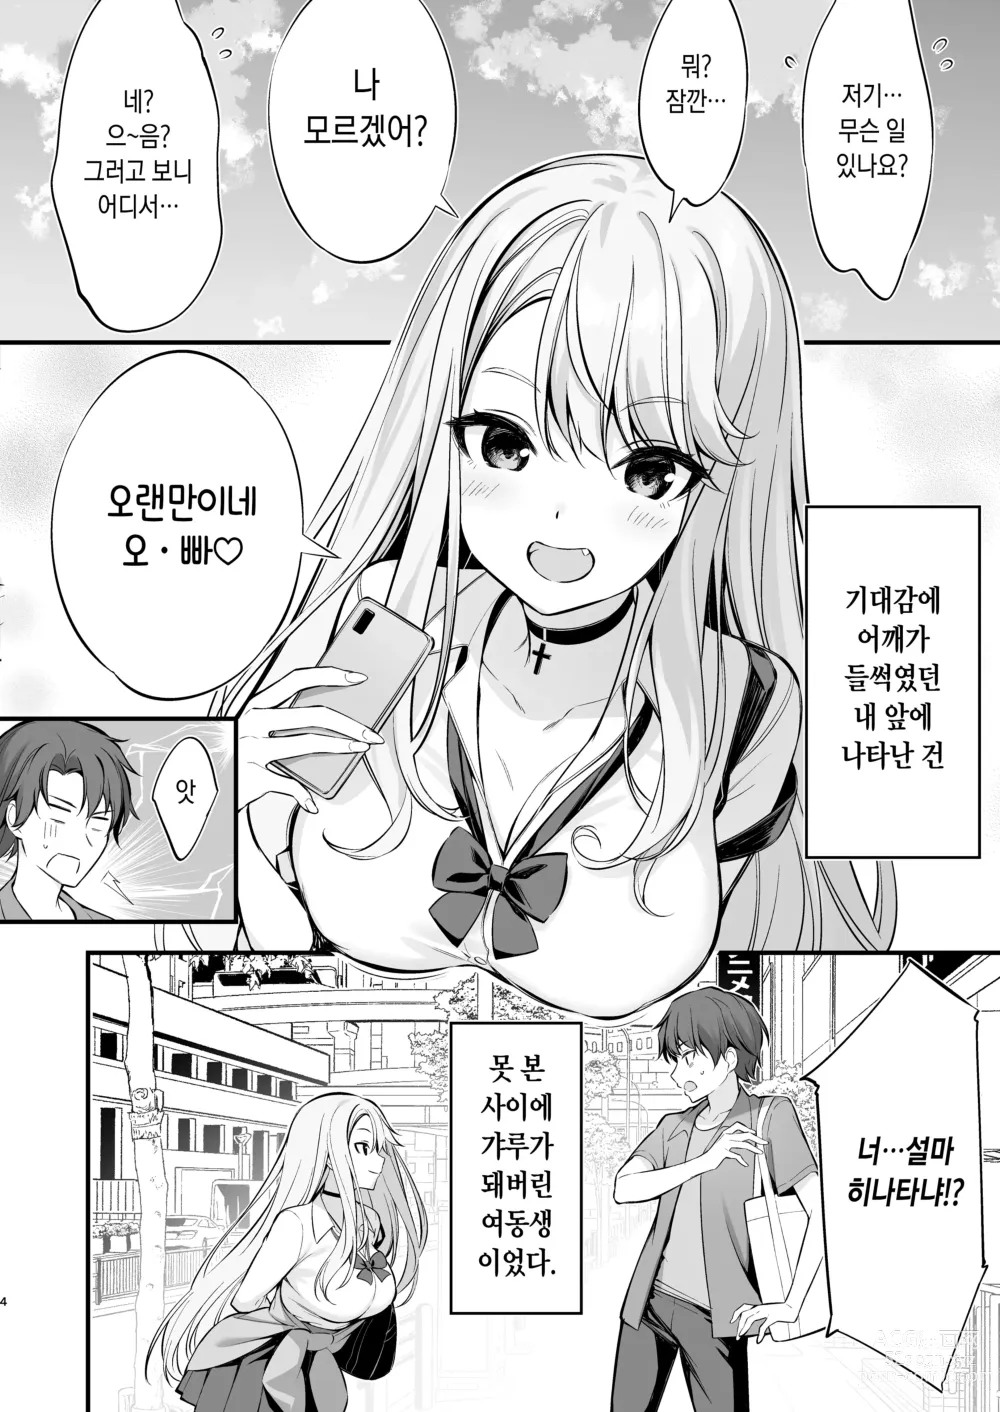 Page 4 of doujinshi SNS로 만나게 된 건 갸루가 된 여동생이었다